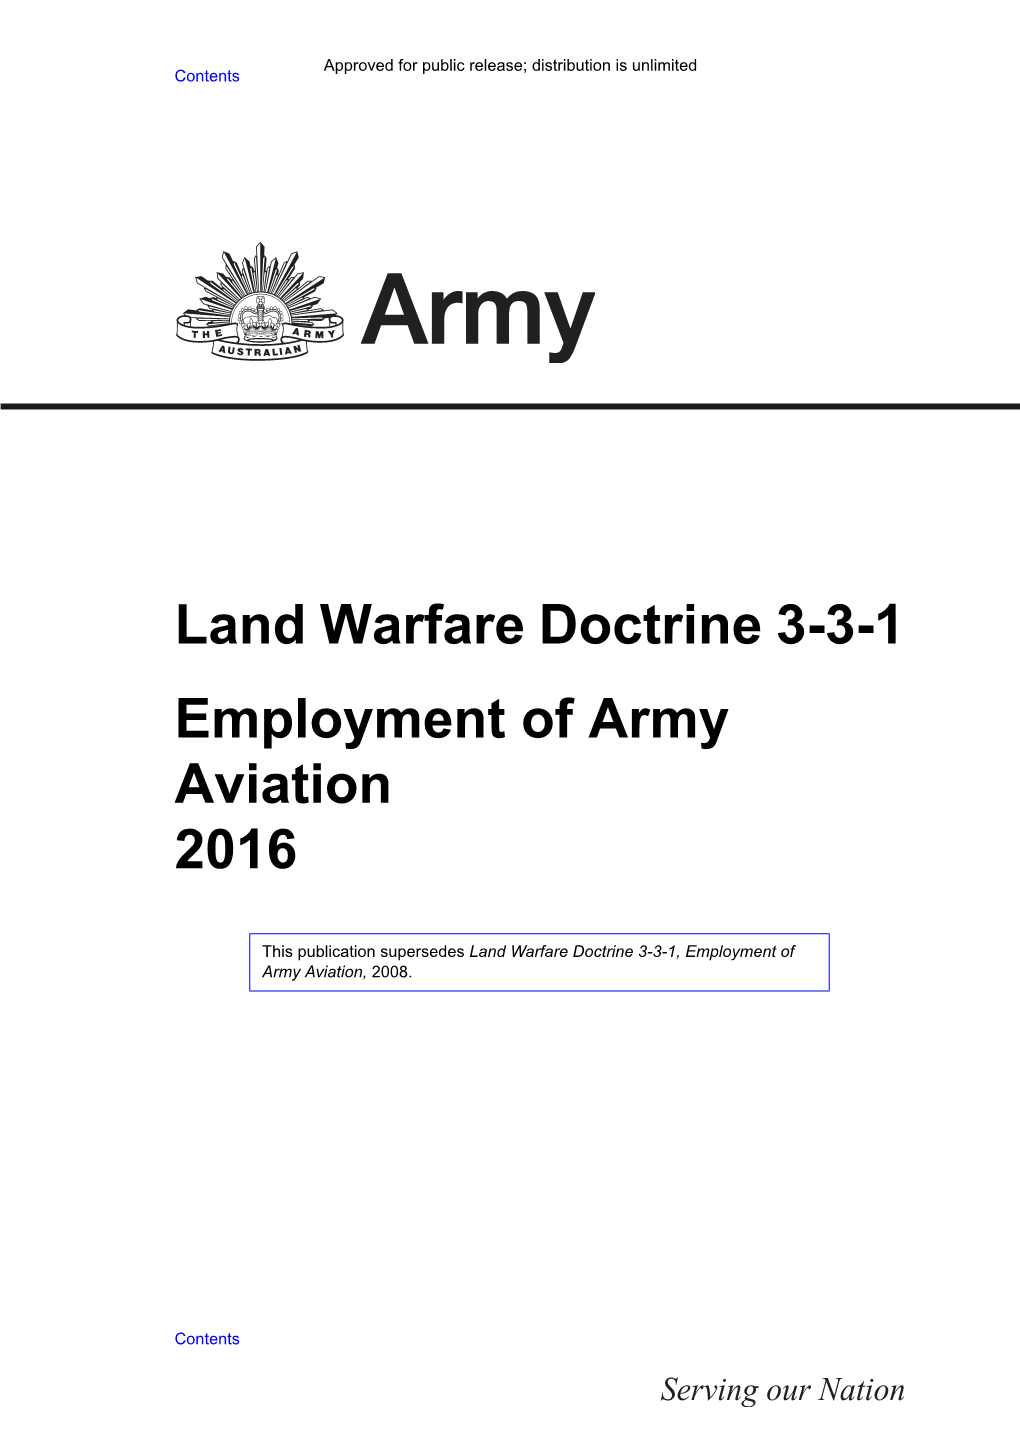 Land Warfare Doctrine 3-3-1 Employment of Army Aviation 2016